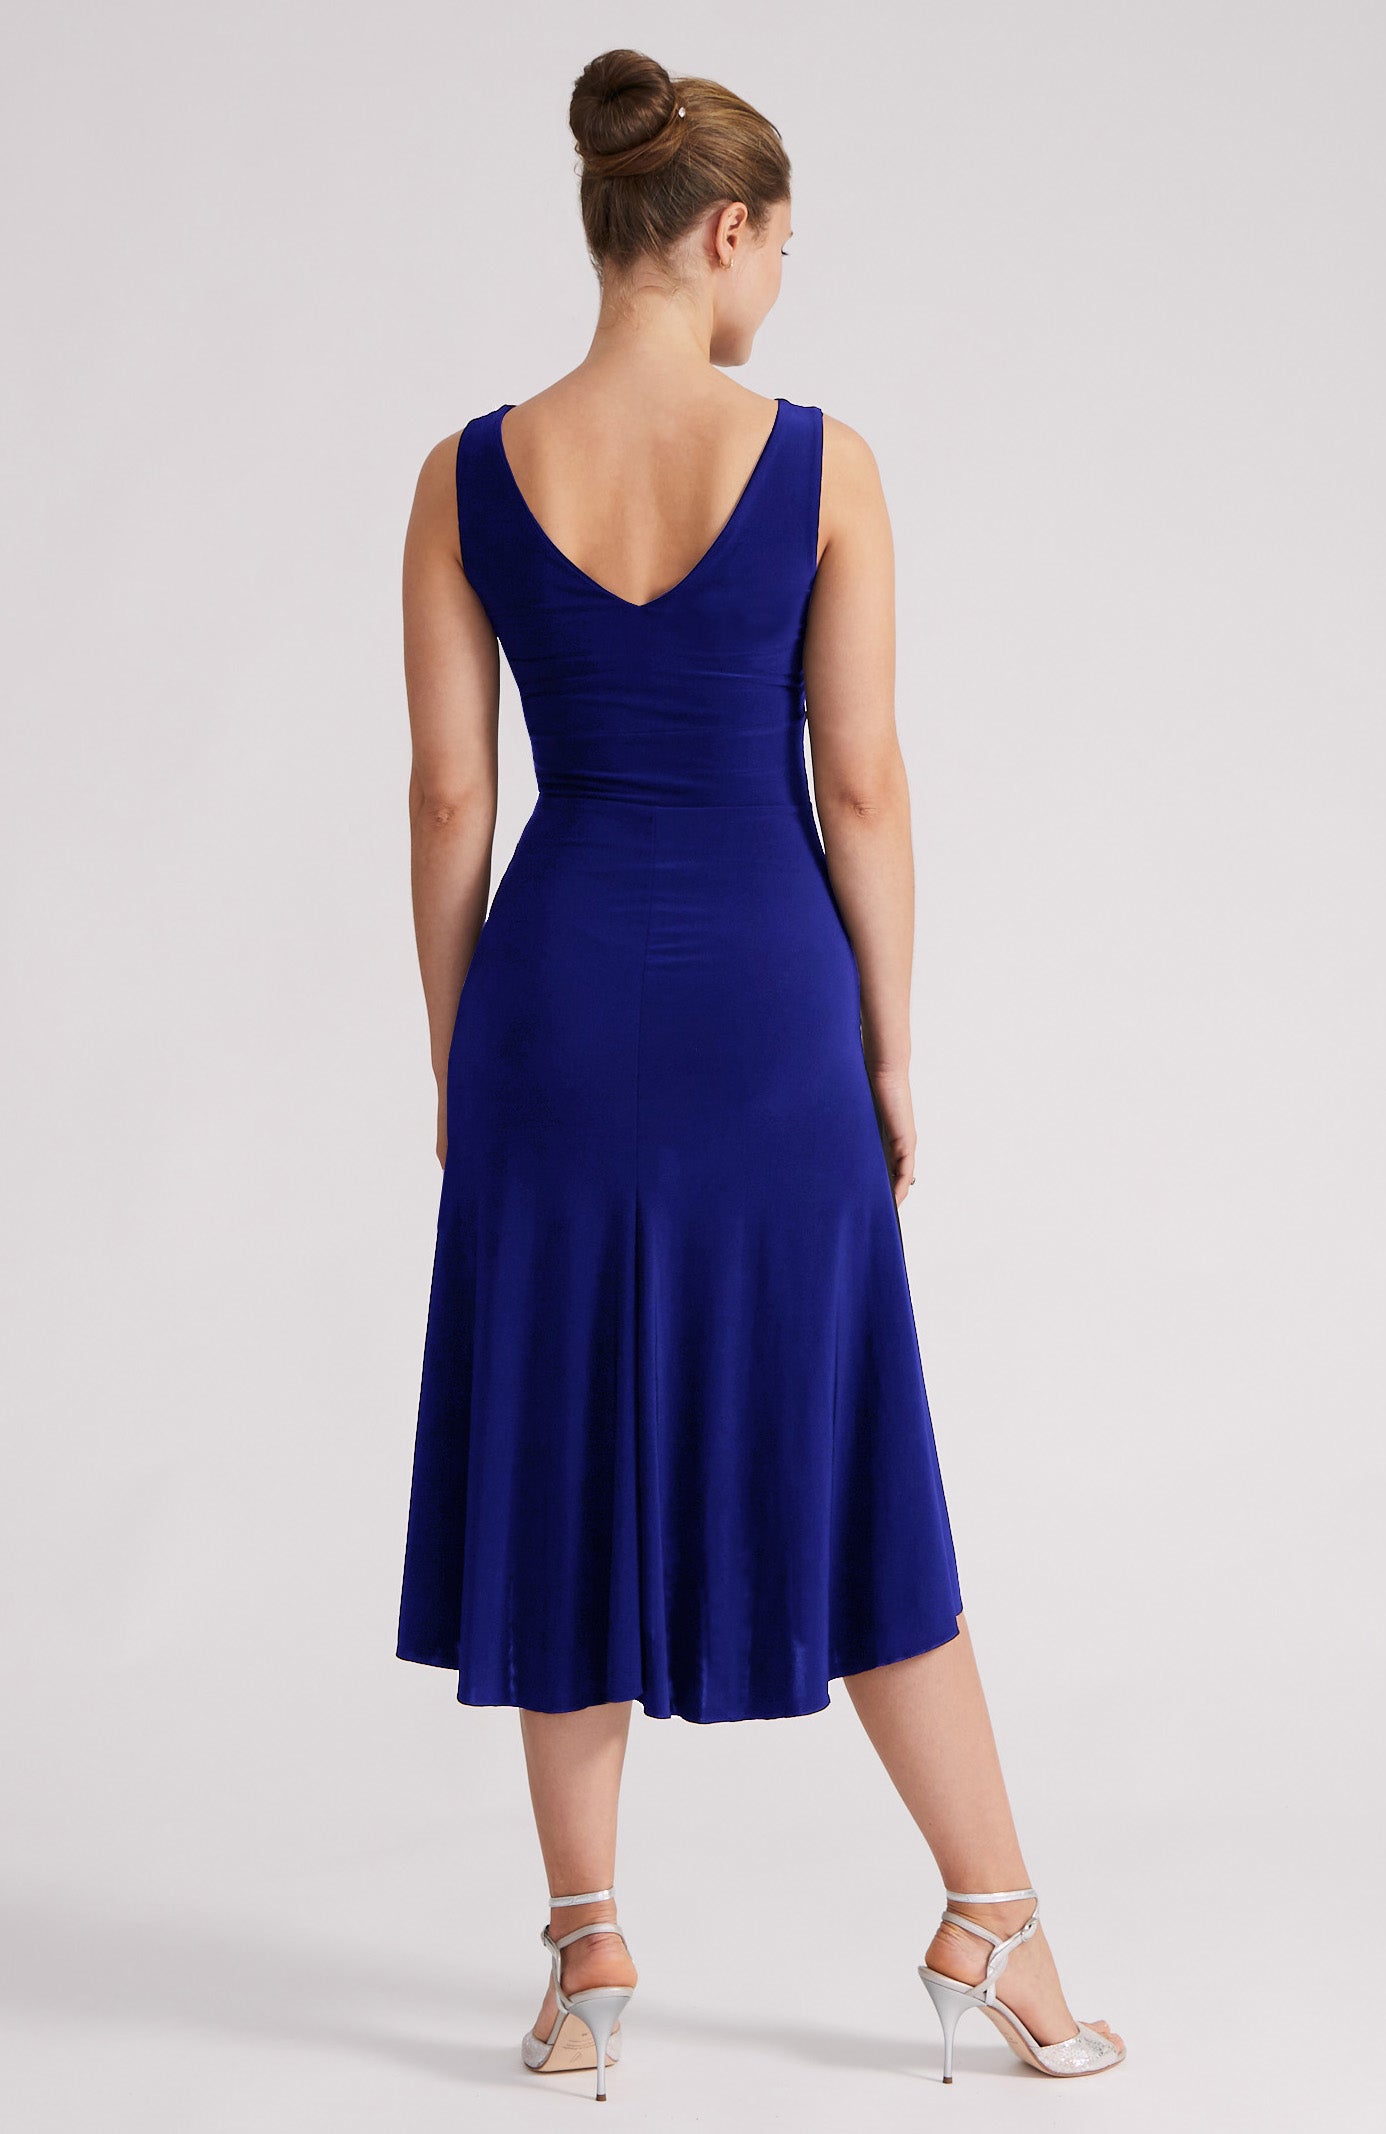 blue tango dress